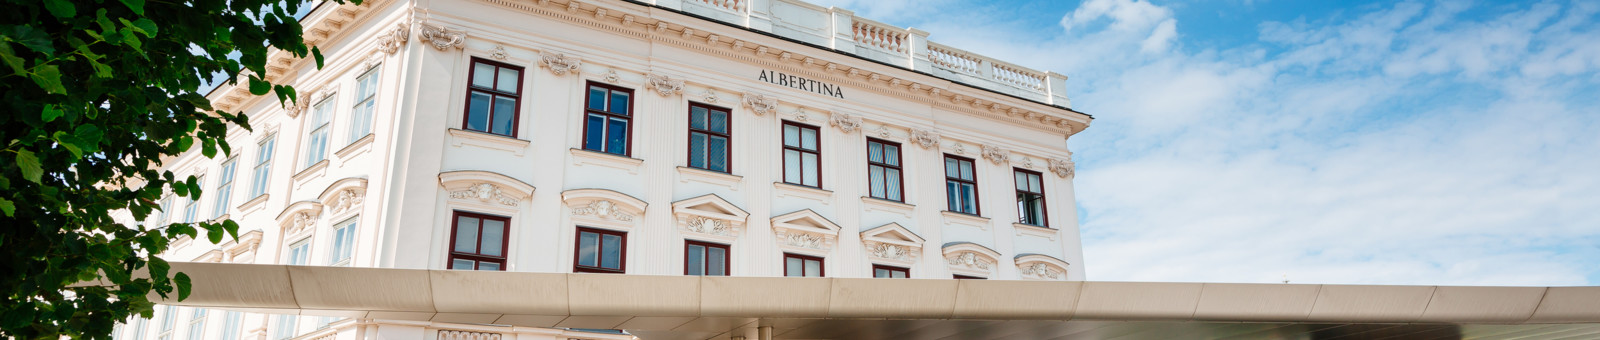     The Albertina Museum 